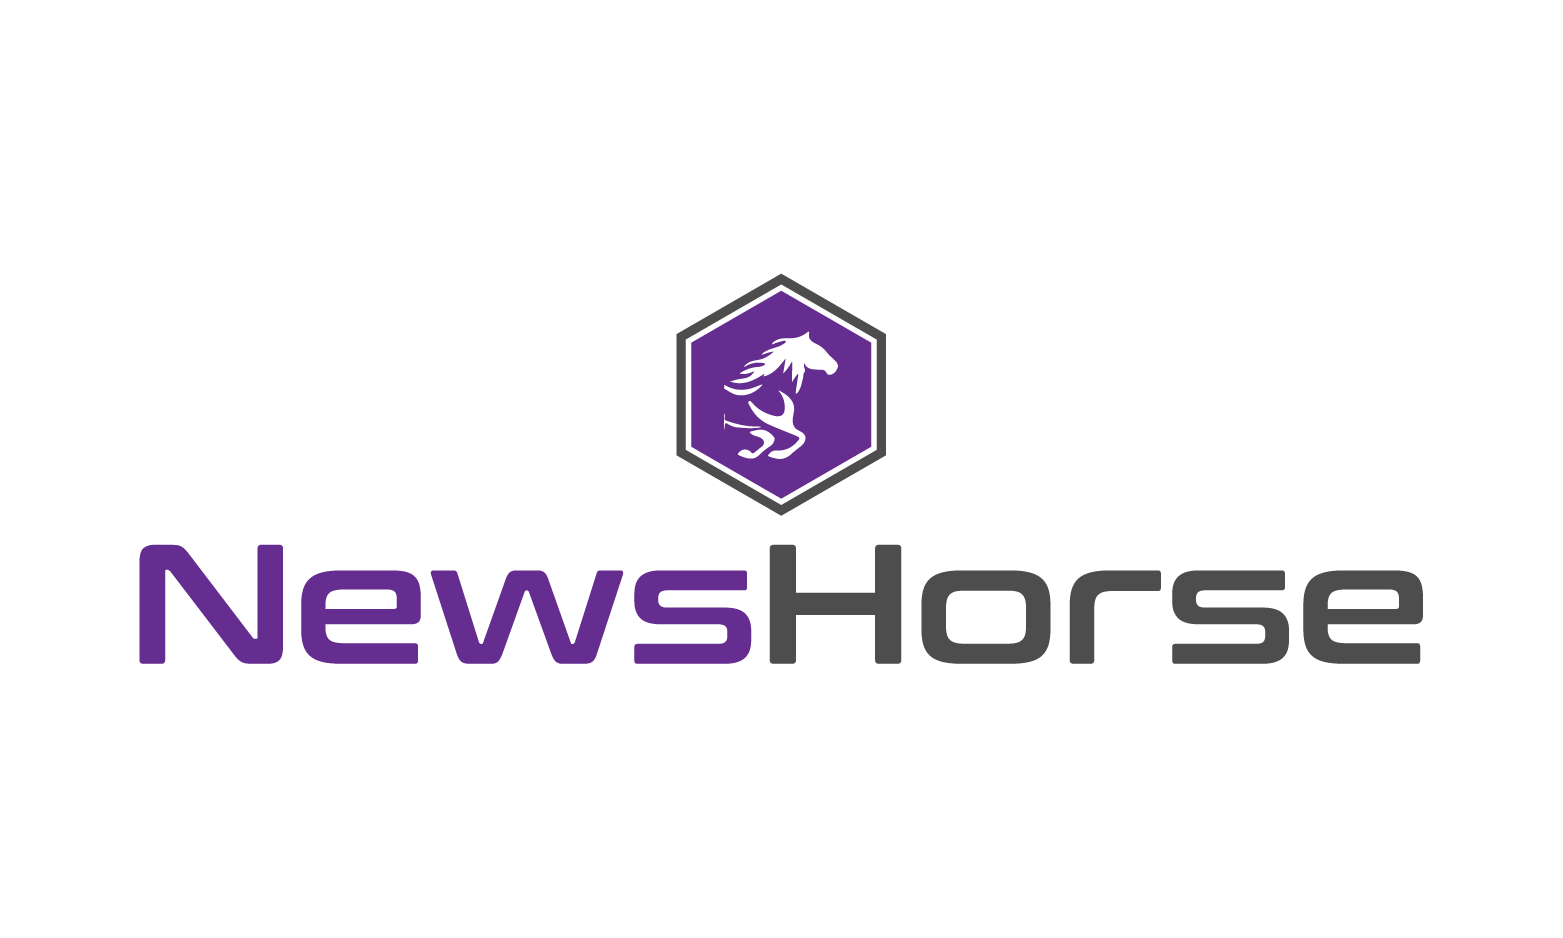 NewsHorse.com - Creative brandable domain for sale